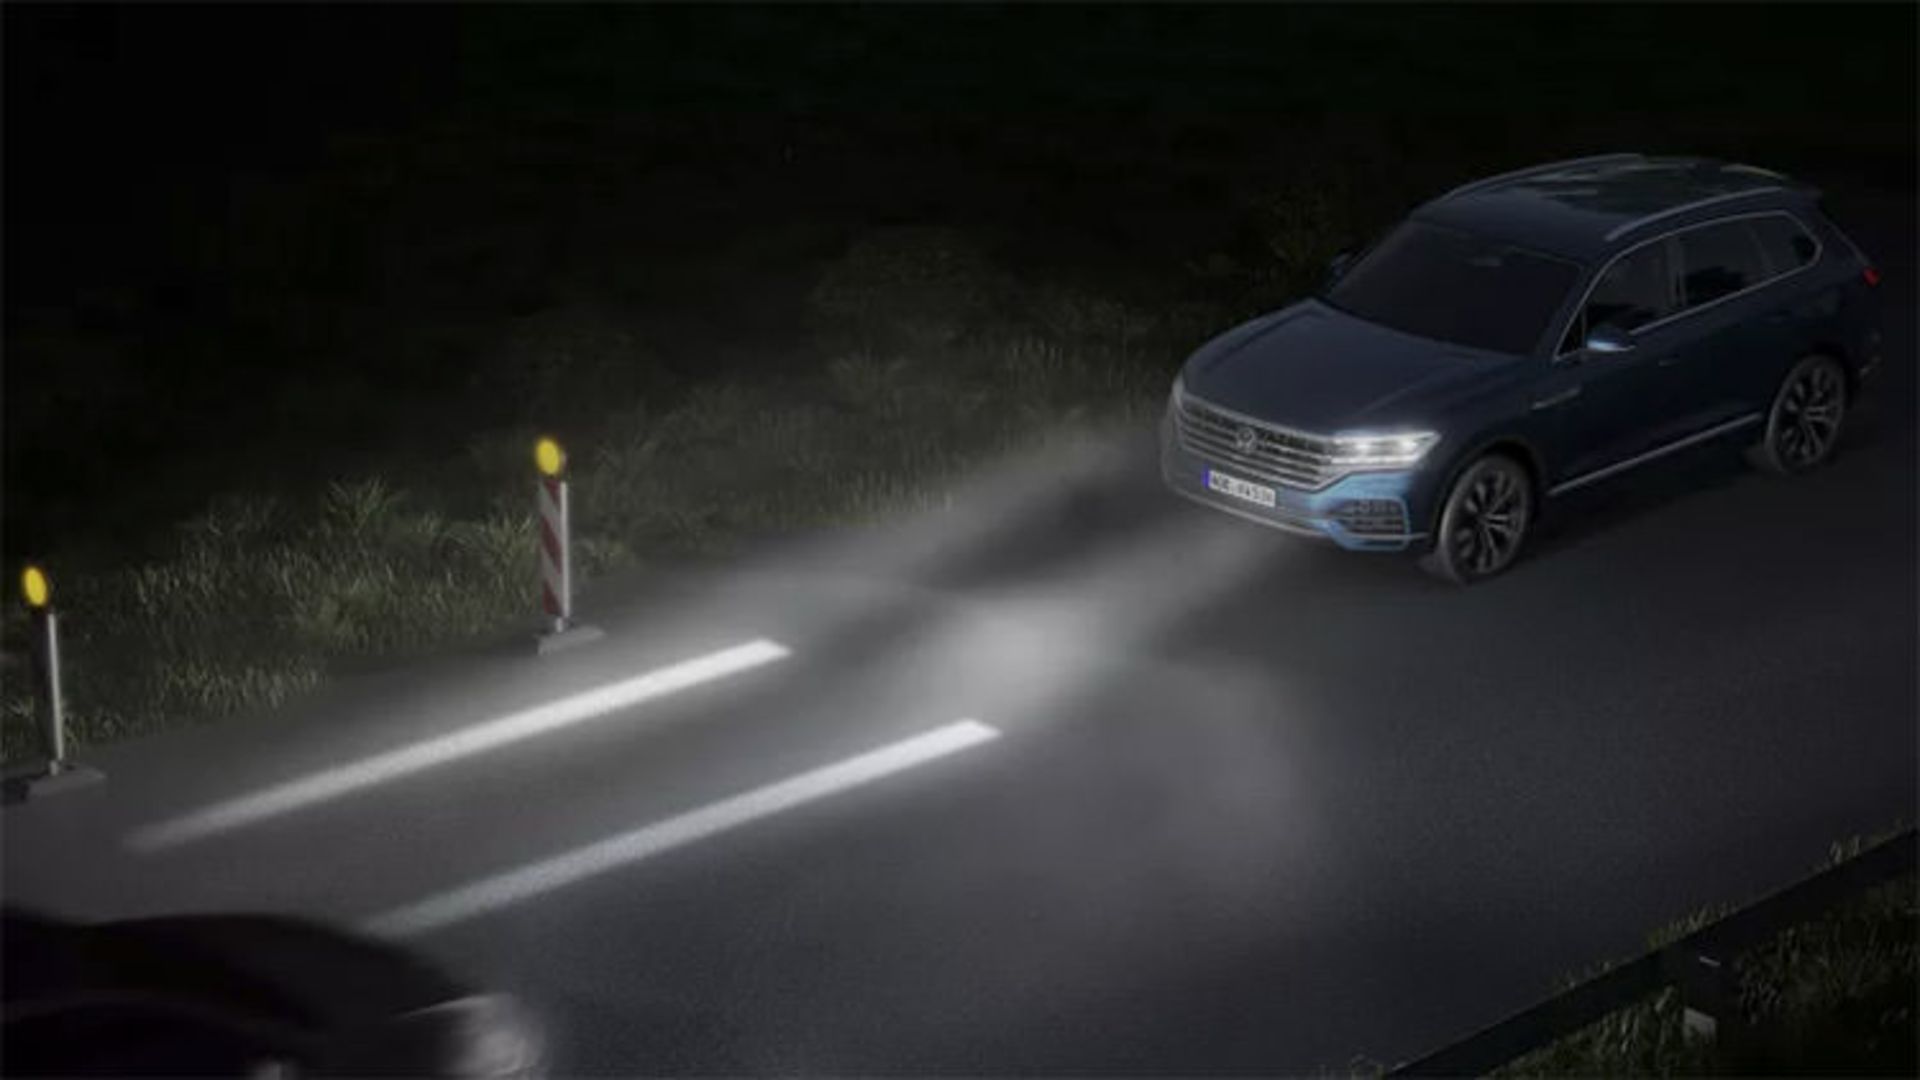 Volkswagen matrix LED headlight / چراغ ماتریسی LED فولکس‌واگن